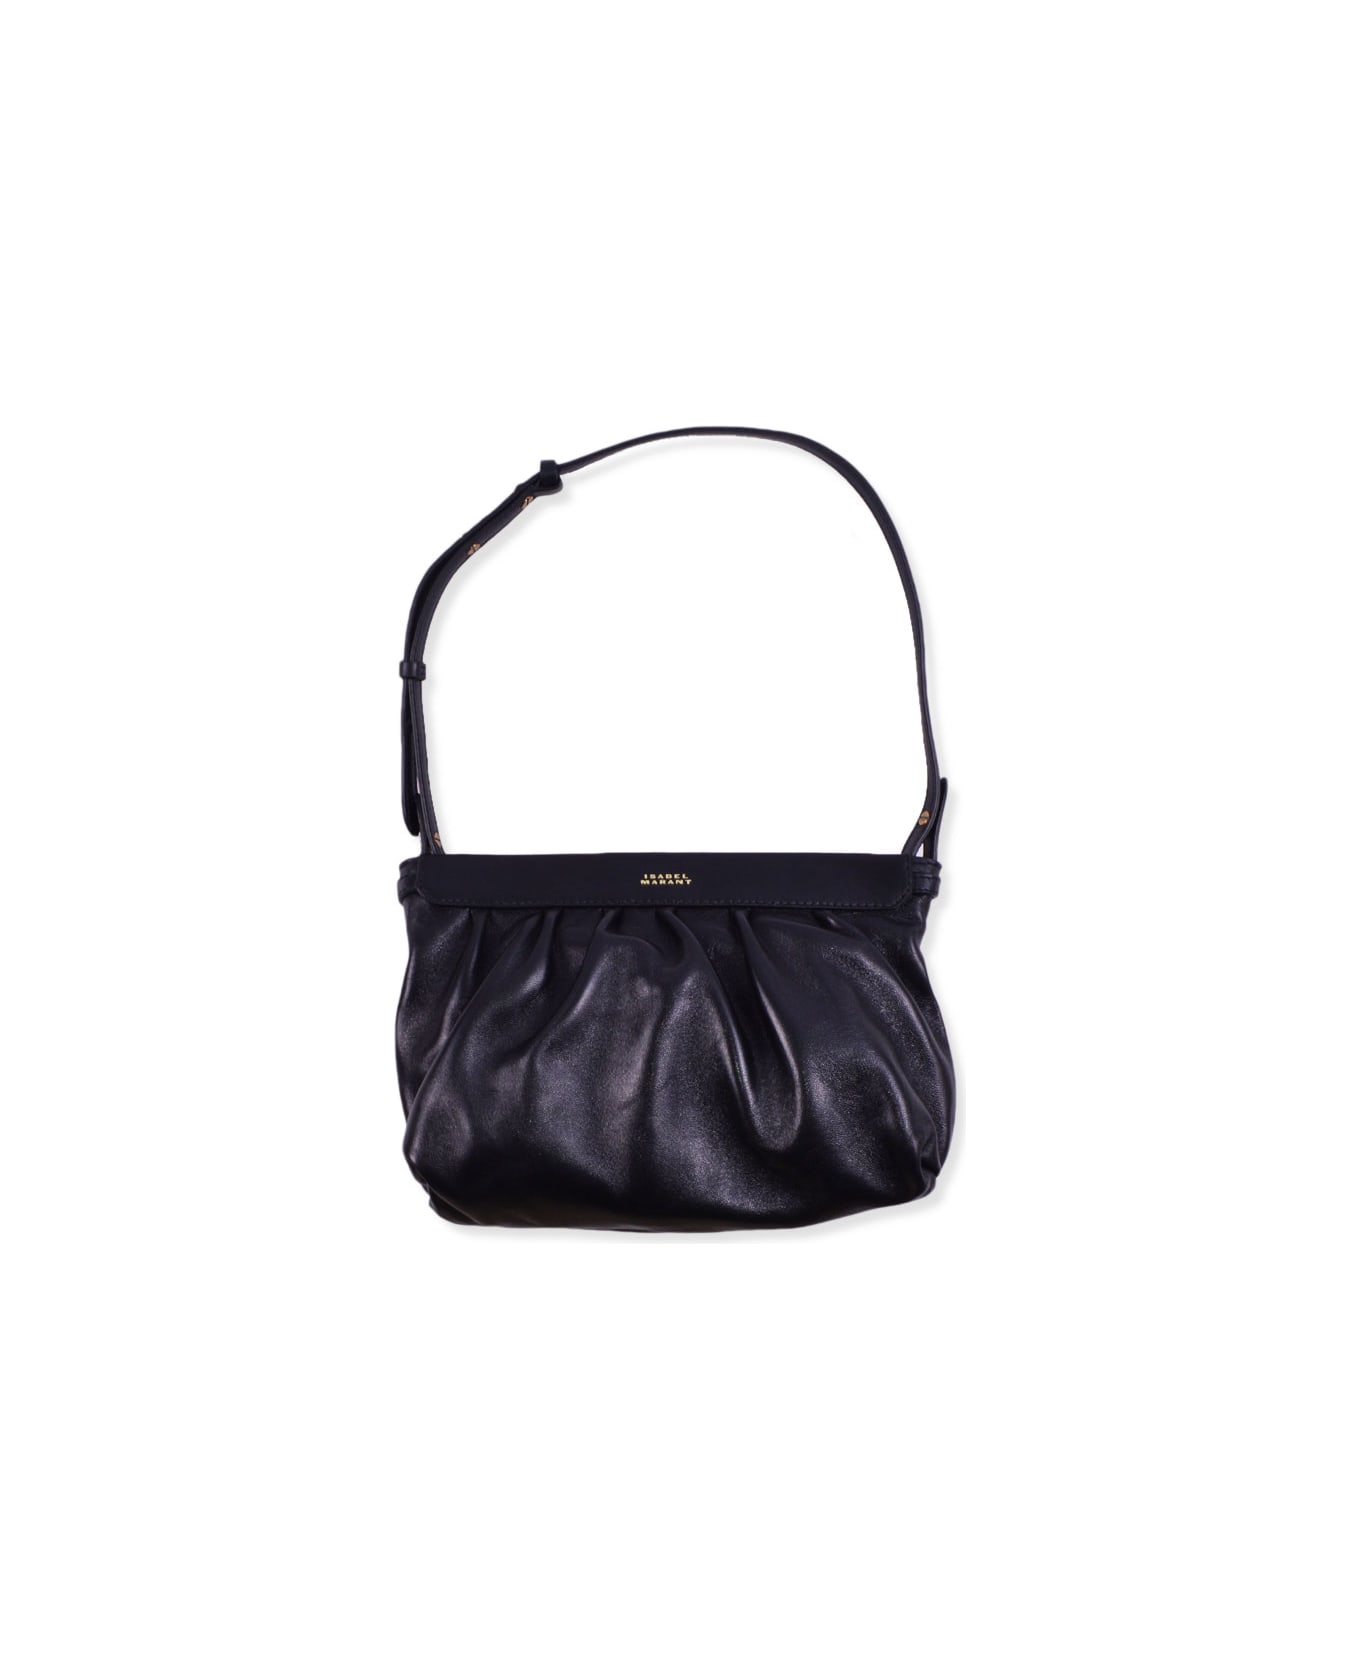 Isabel Marant Handbag - Black/Gold トートバッグ